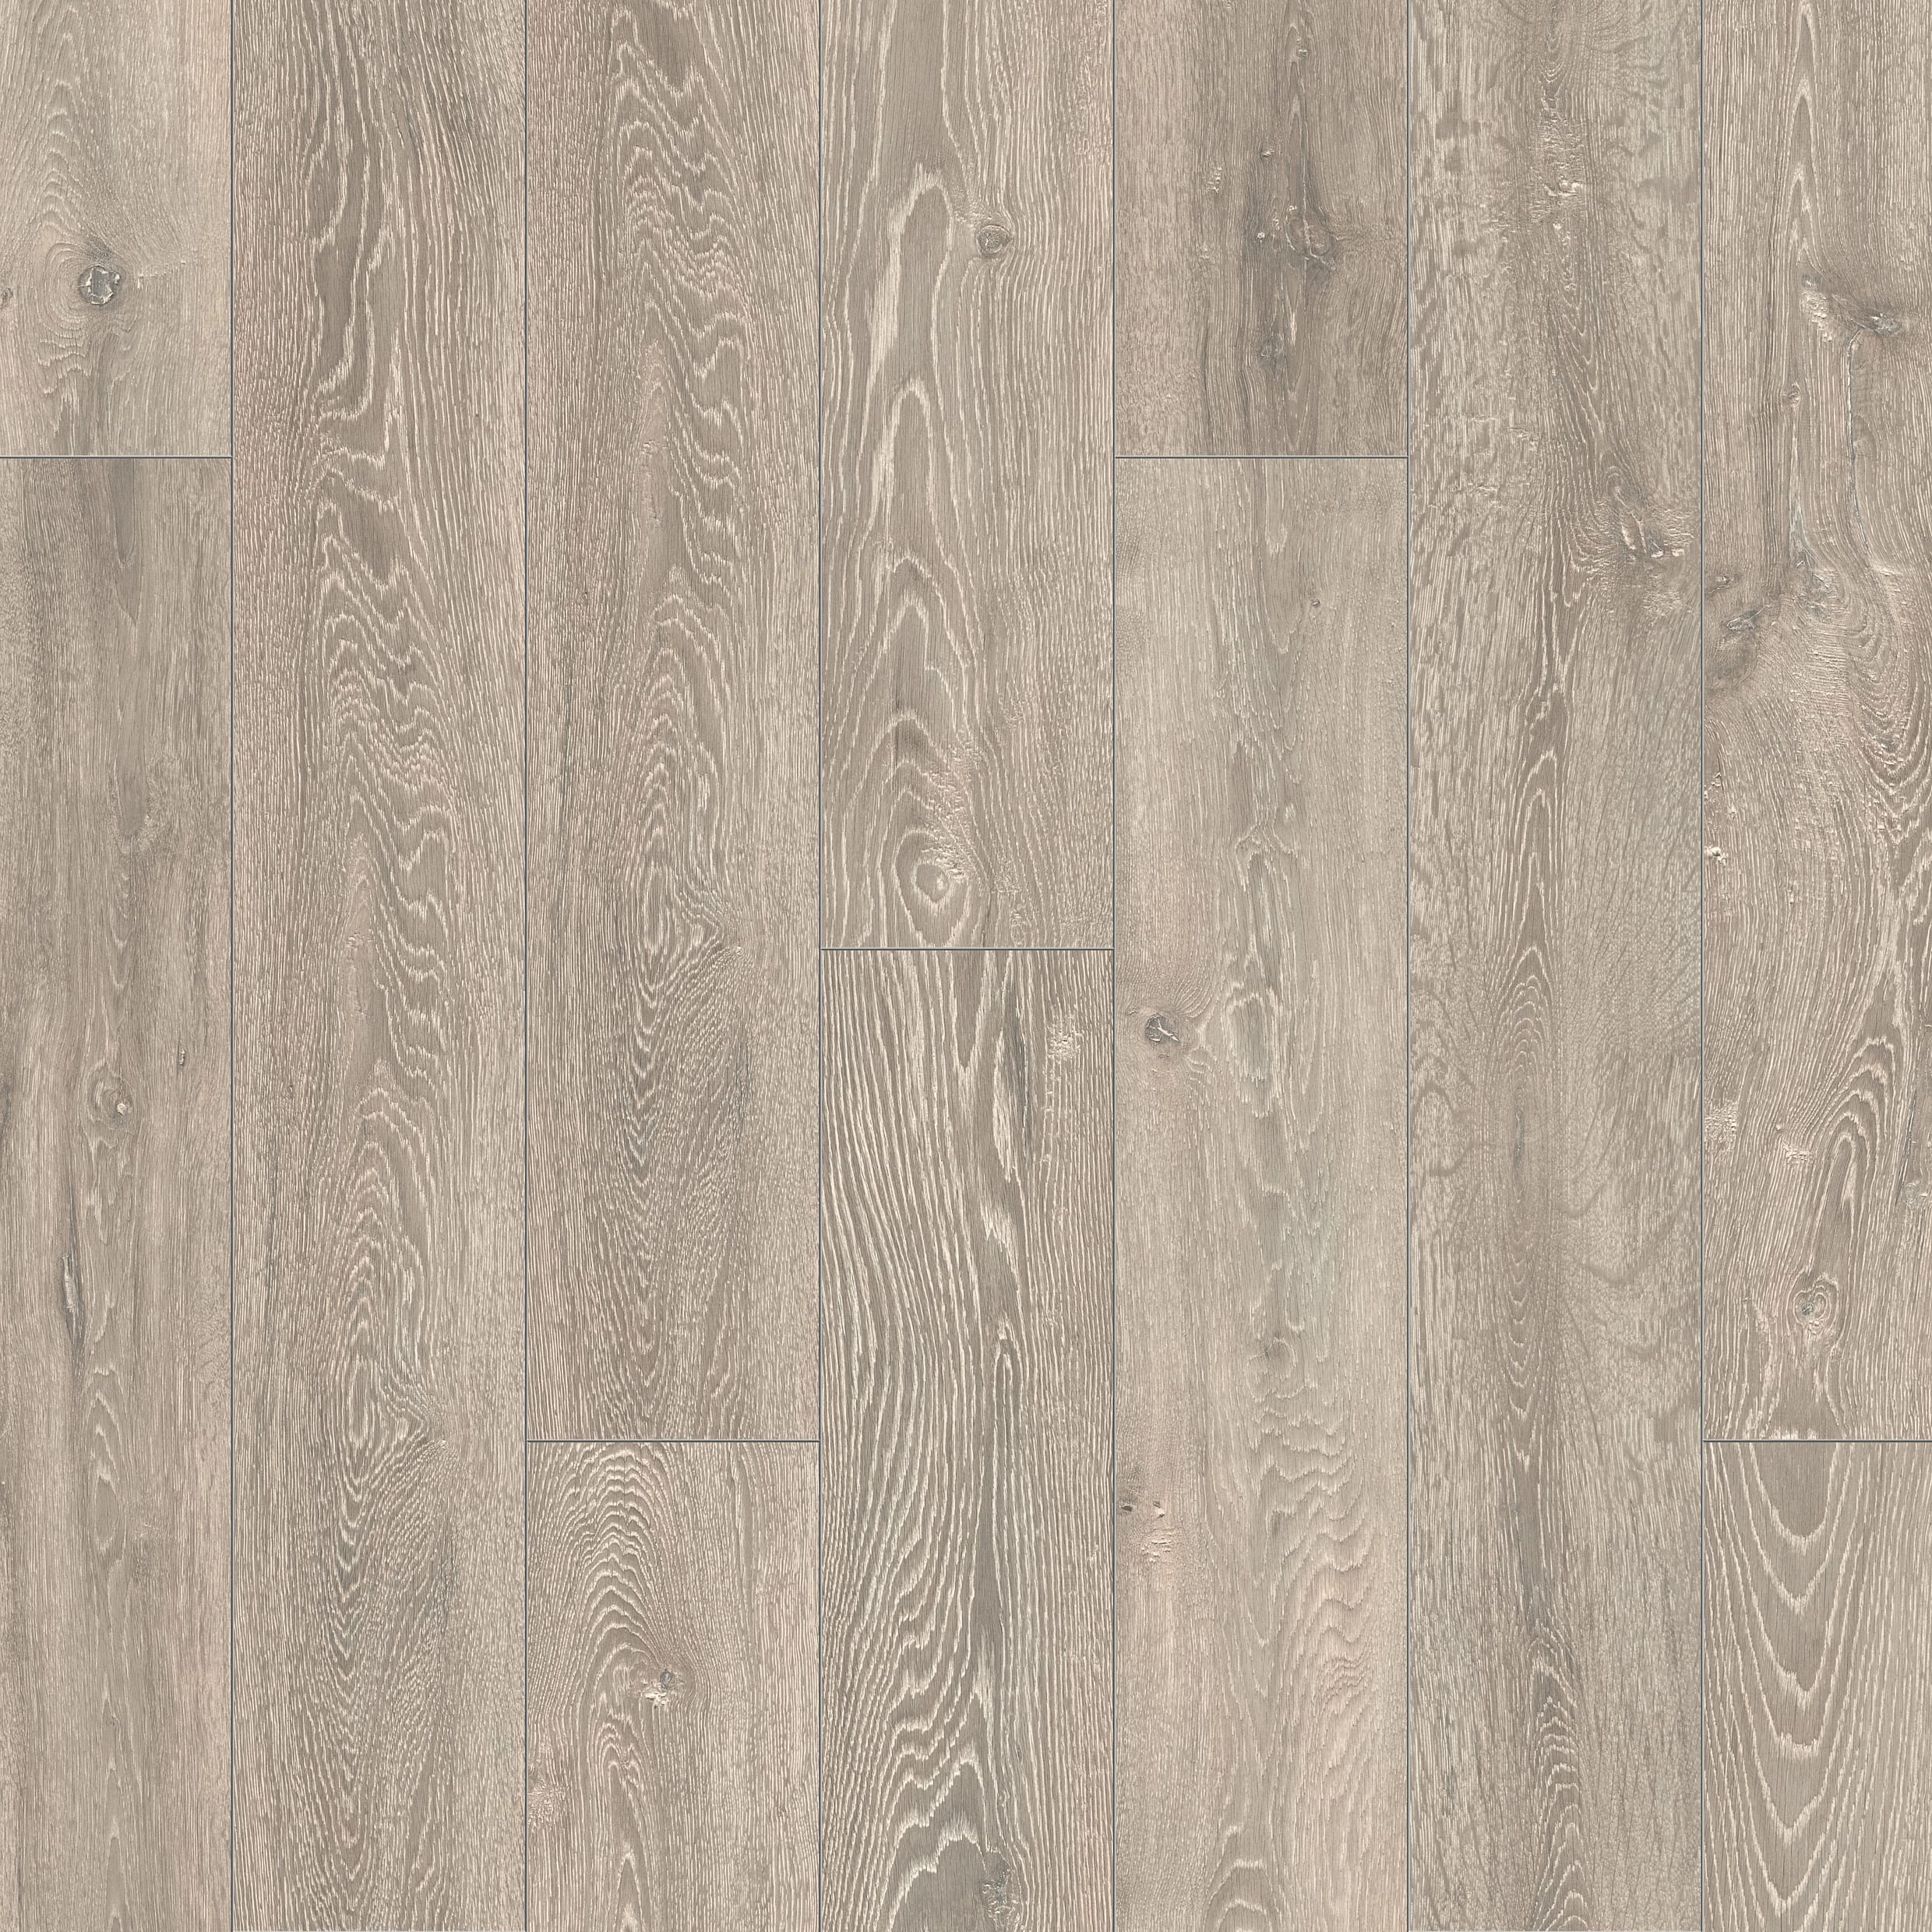 Shimla Grey Oak 8mm Laminate Flooring - 2.22m2